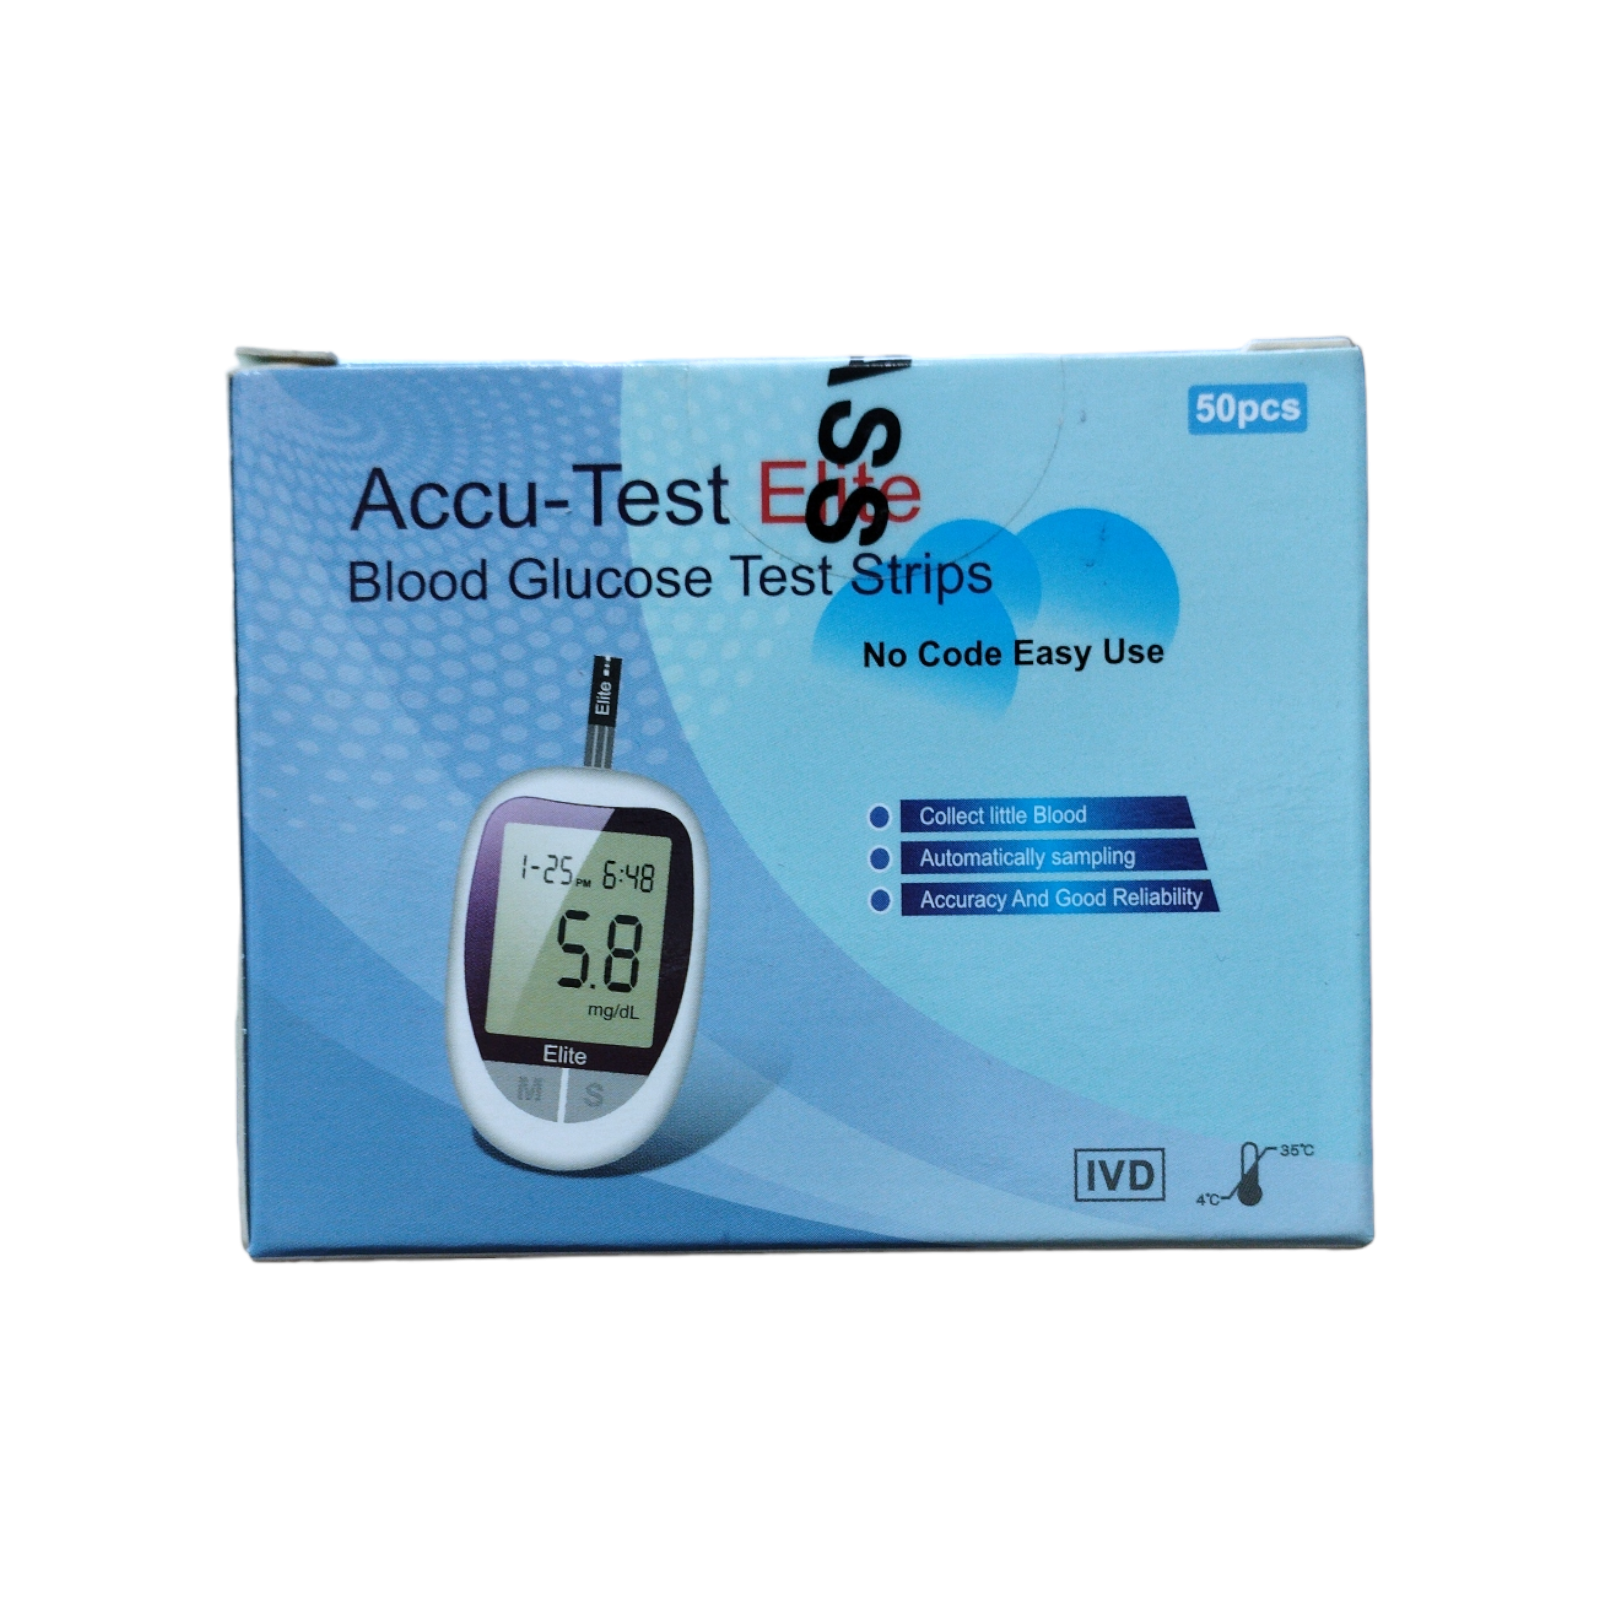 Accu-Test Elite Blood Glucose Test Strips